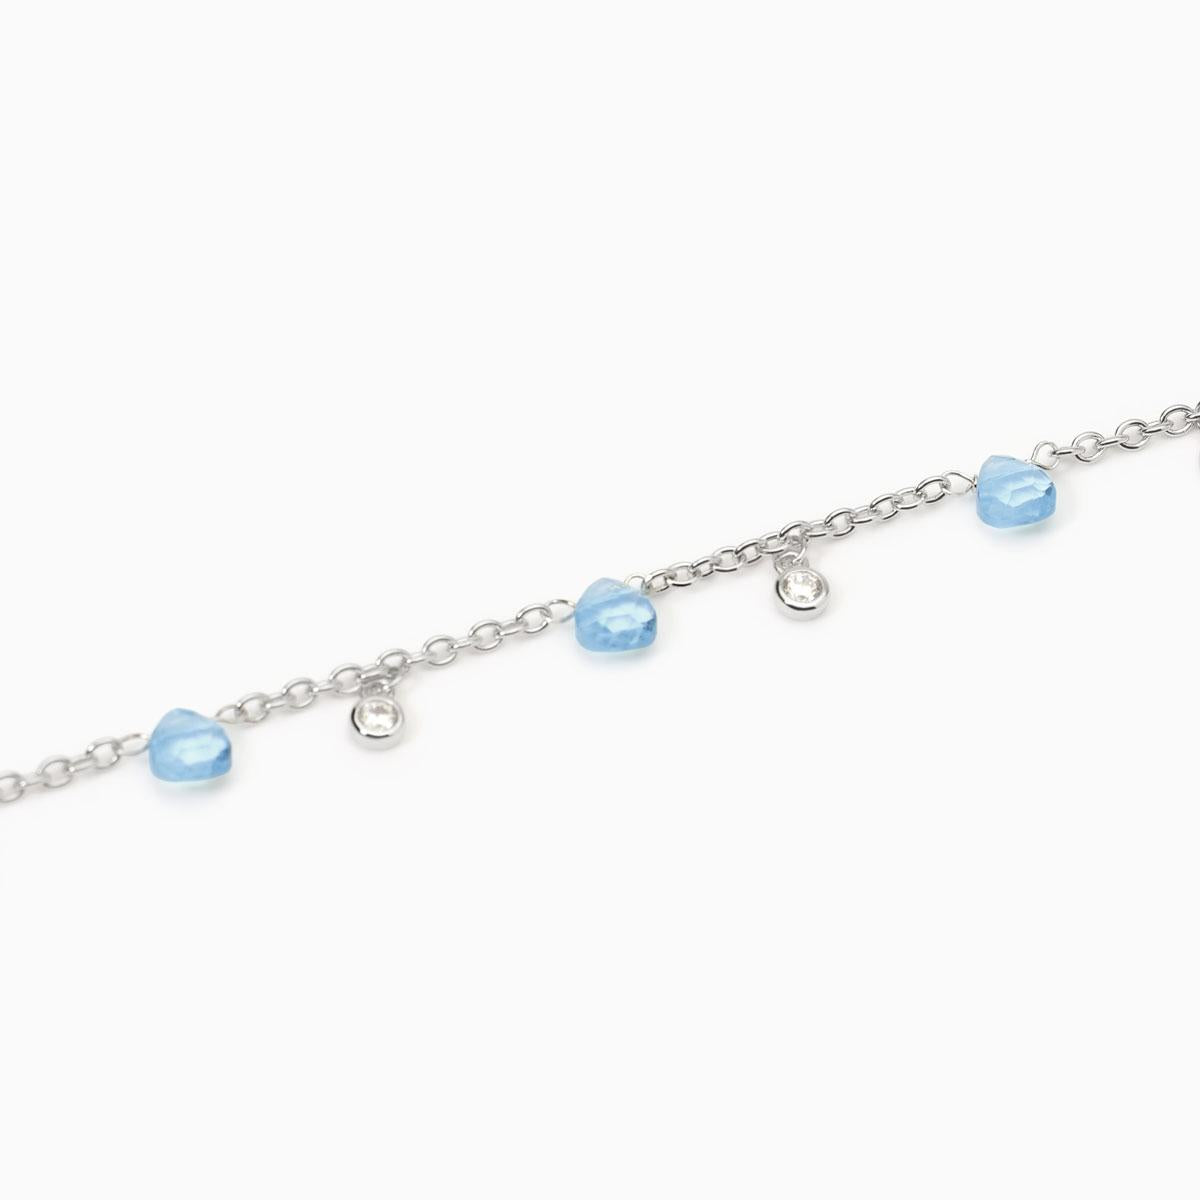 Mabina Woman - Bracelet with blue glass elements BEAUTY CODE - 533893